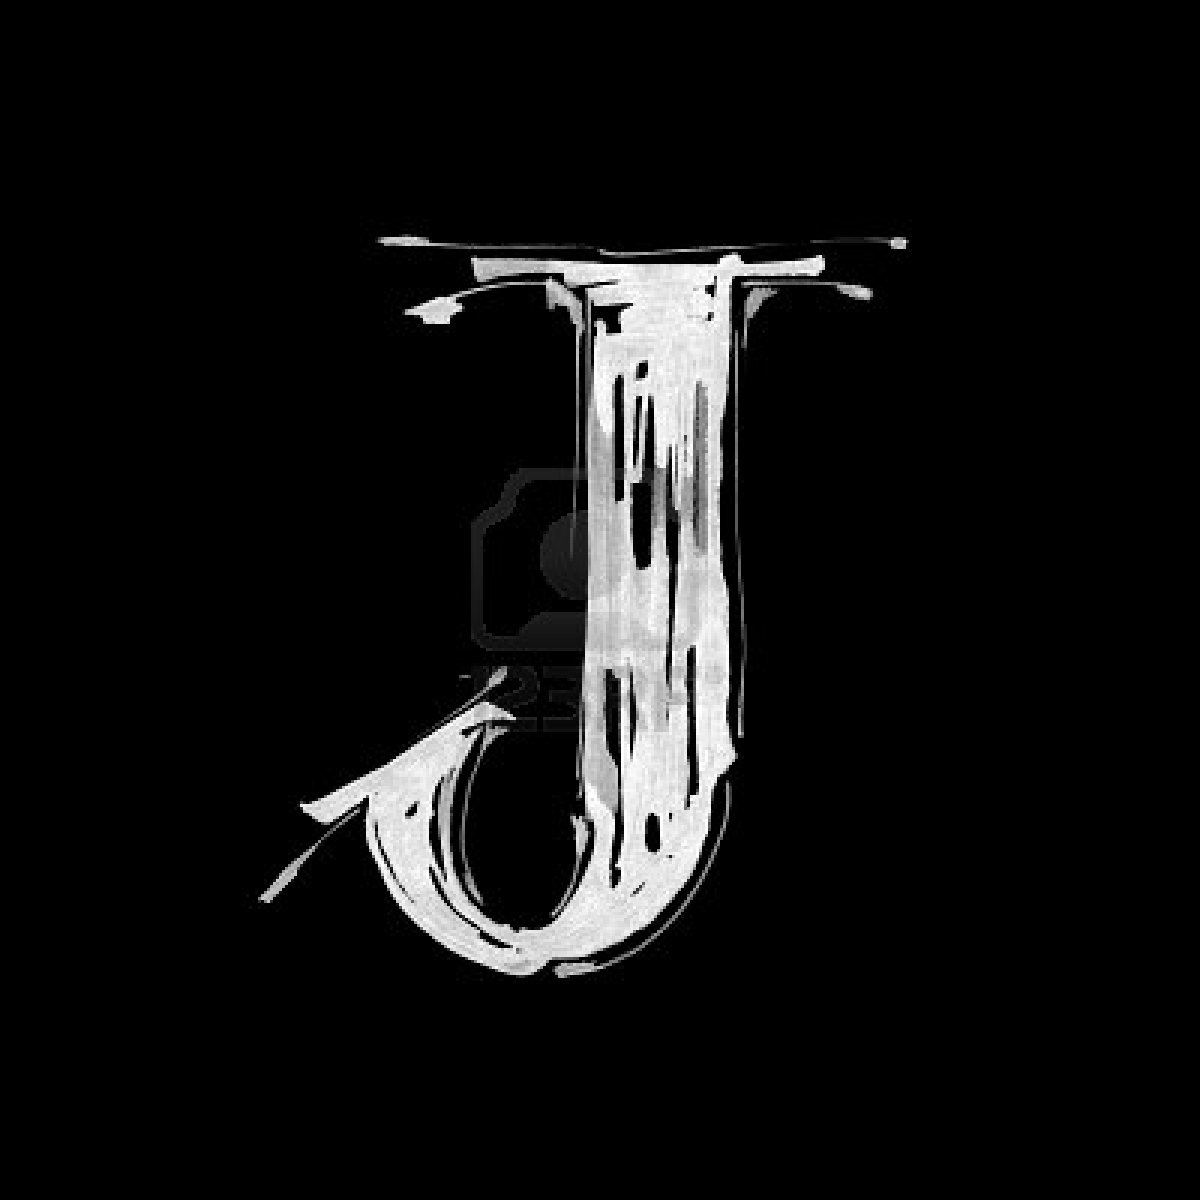 Alphabet J Wallpaper